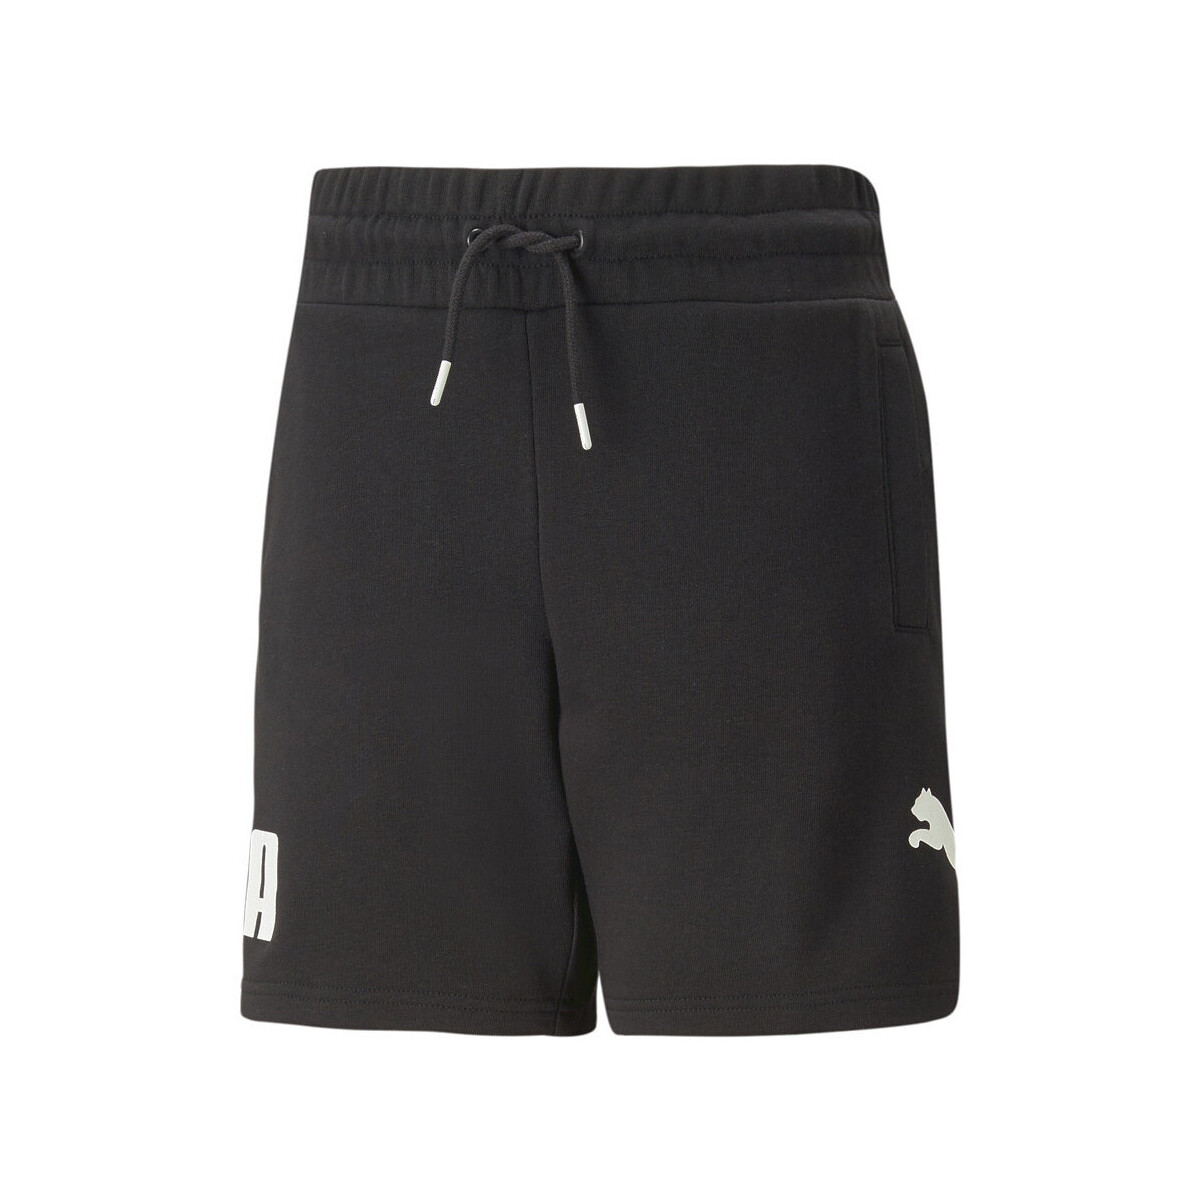 Vêtements Garçon Shorts / Bermudas Puma 673230-01 Noir